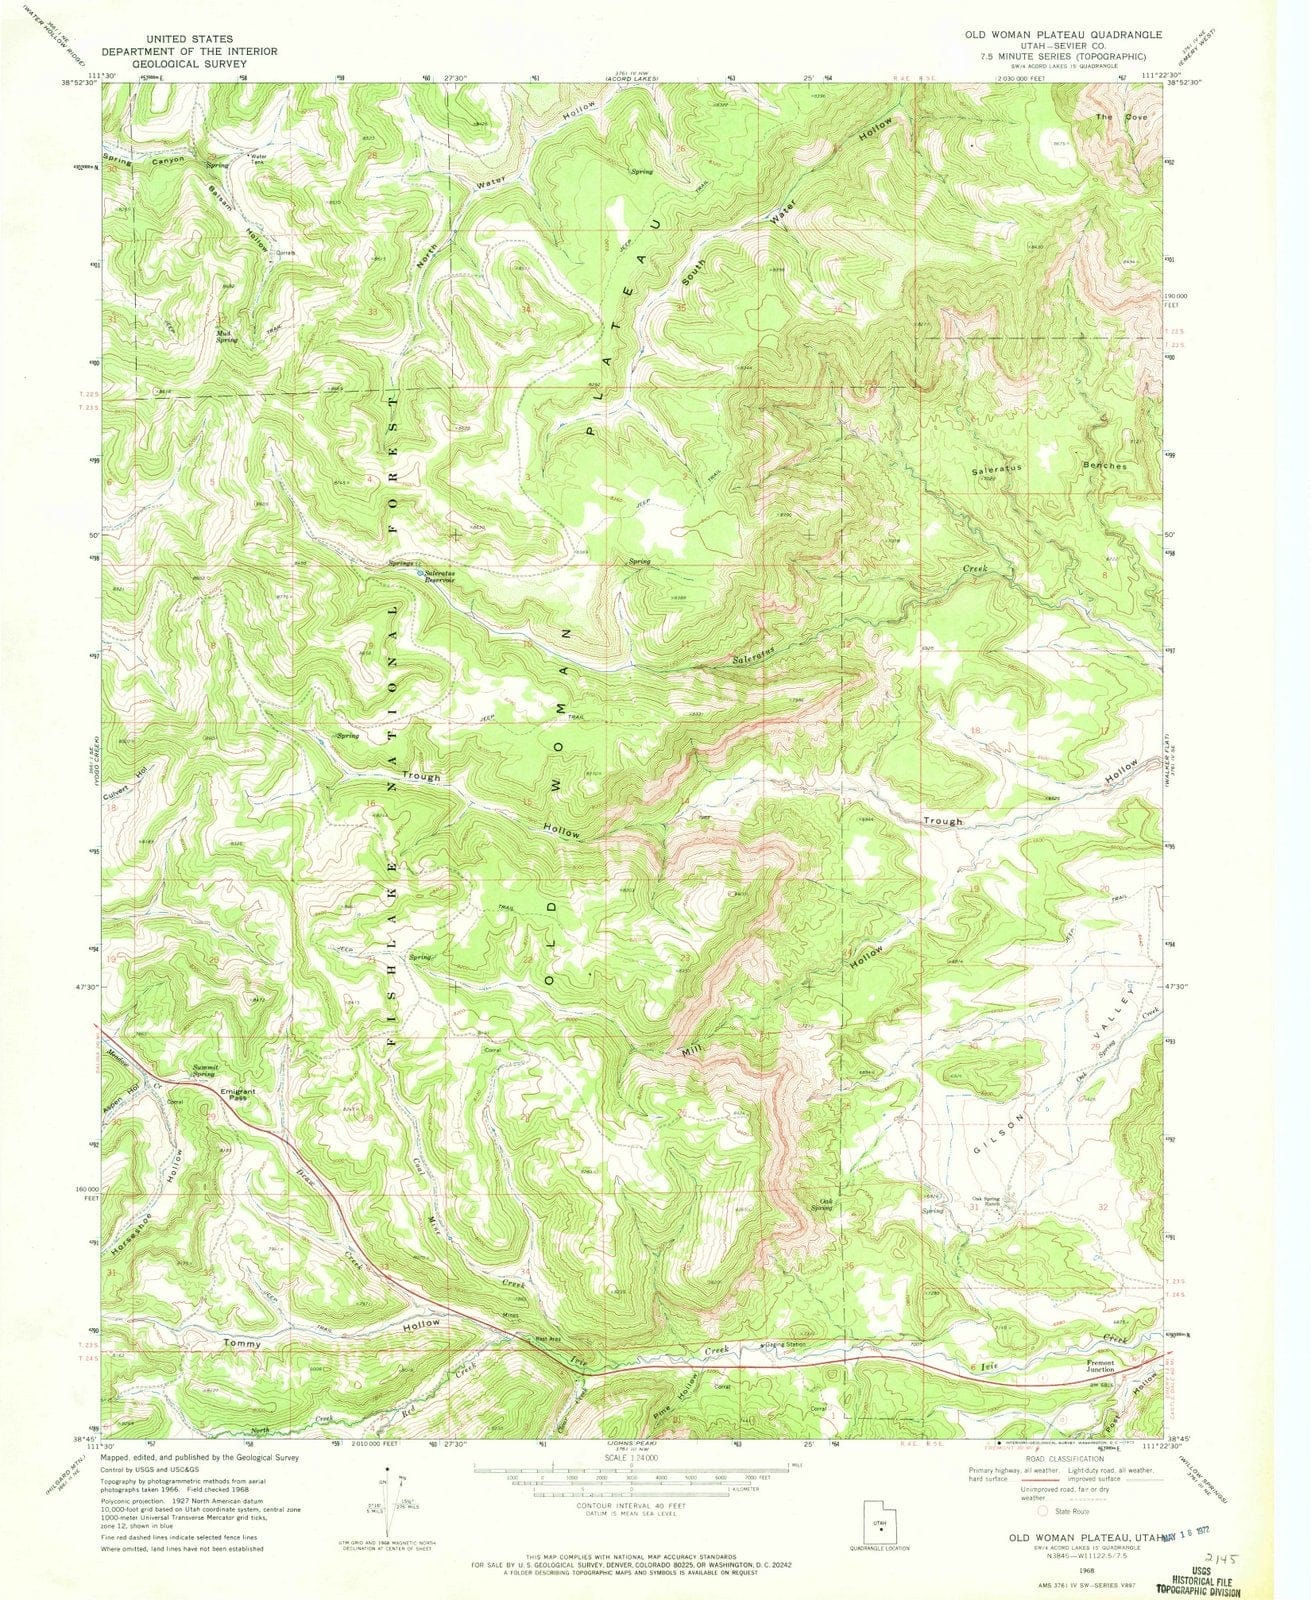 1968 Old Woman Plateau, UT - Utah - USGS Topographic Map